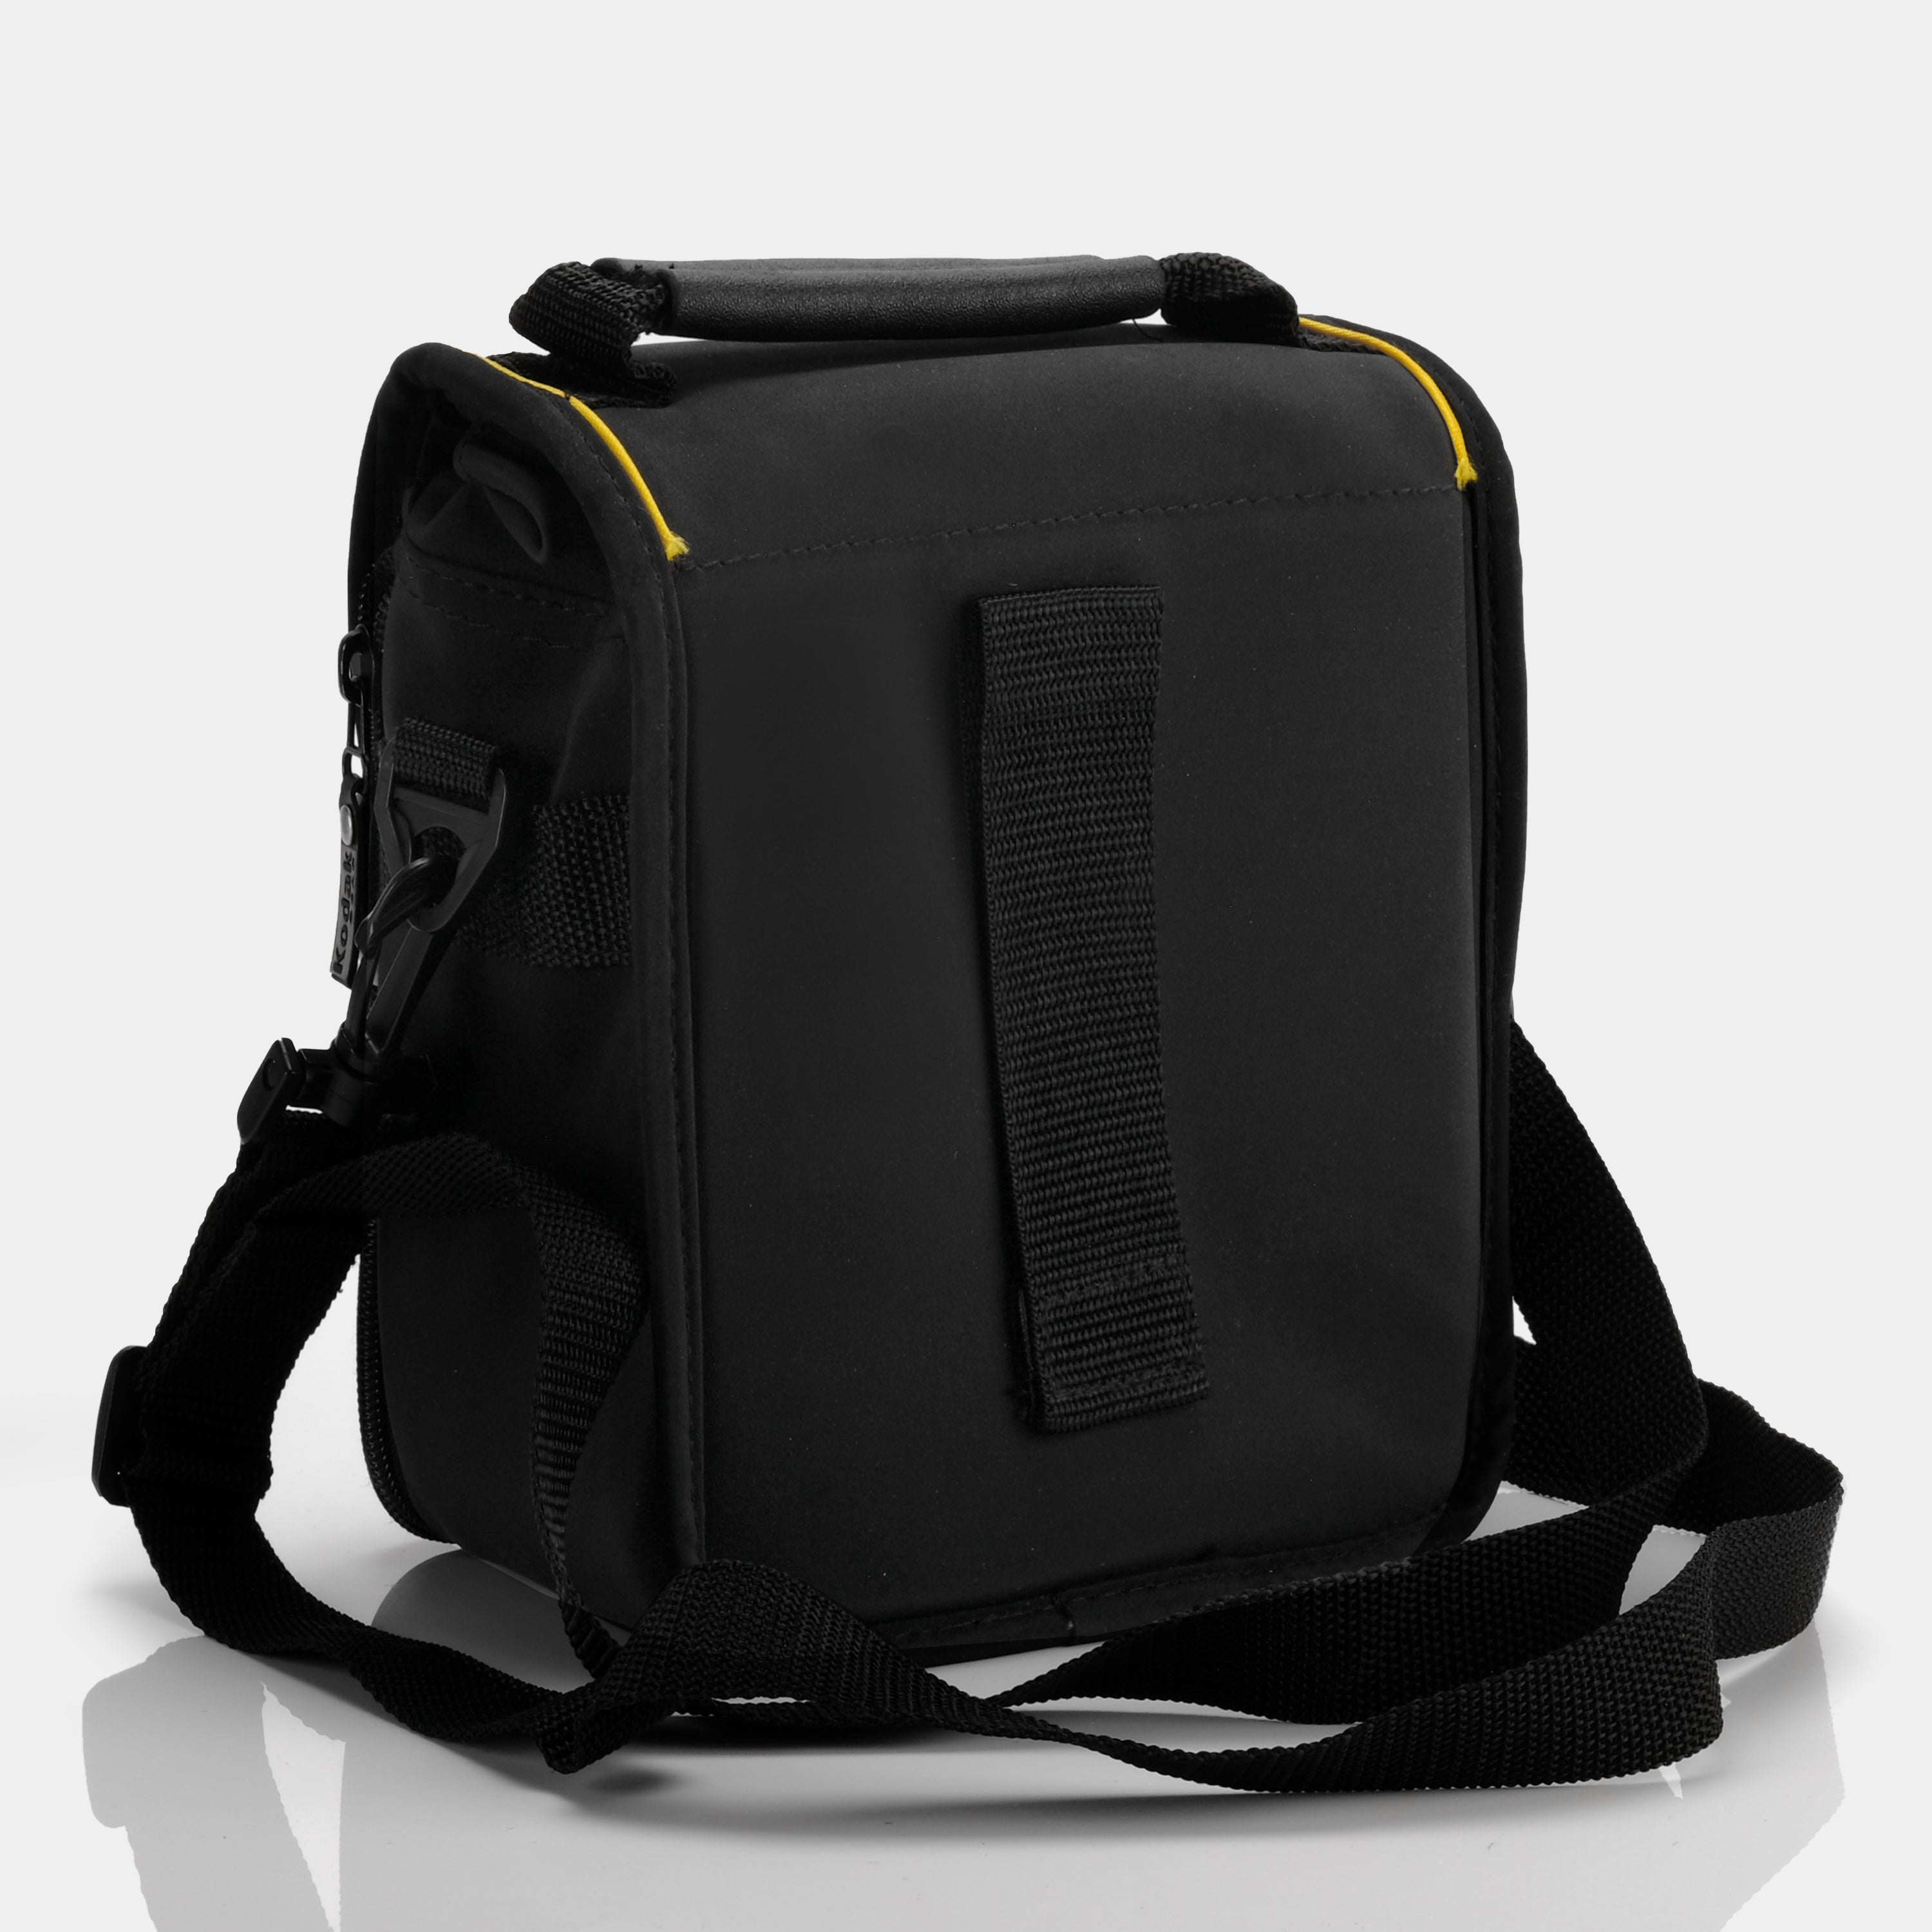 Kodak Black and Yellow Camera Bag